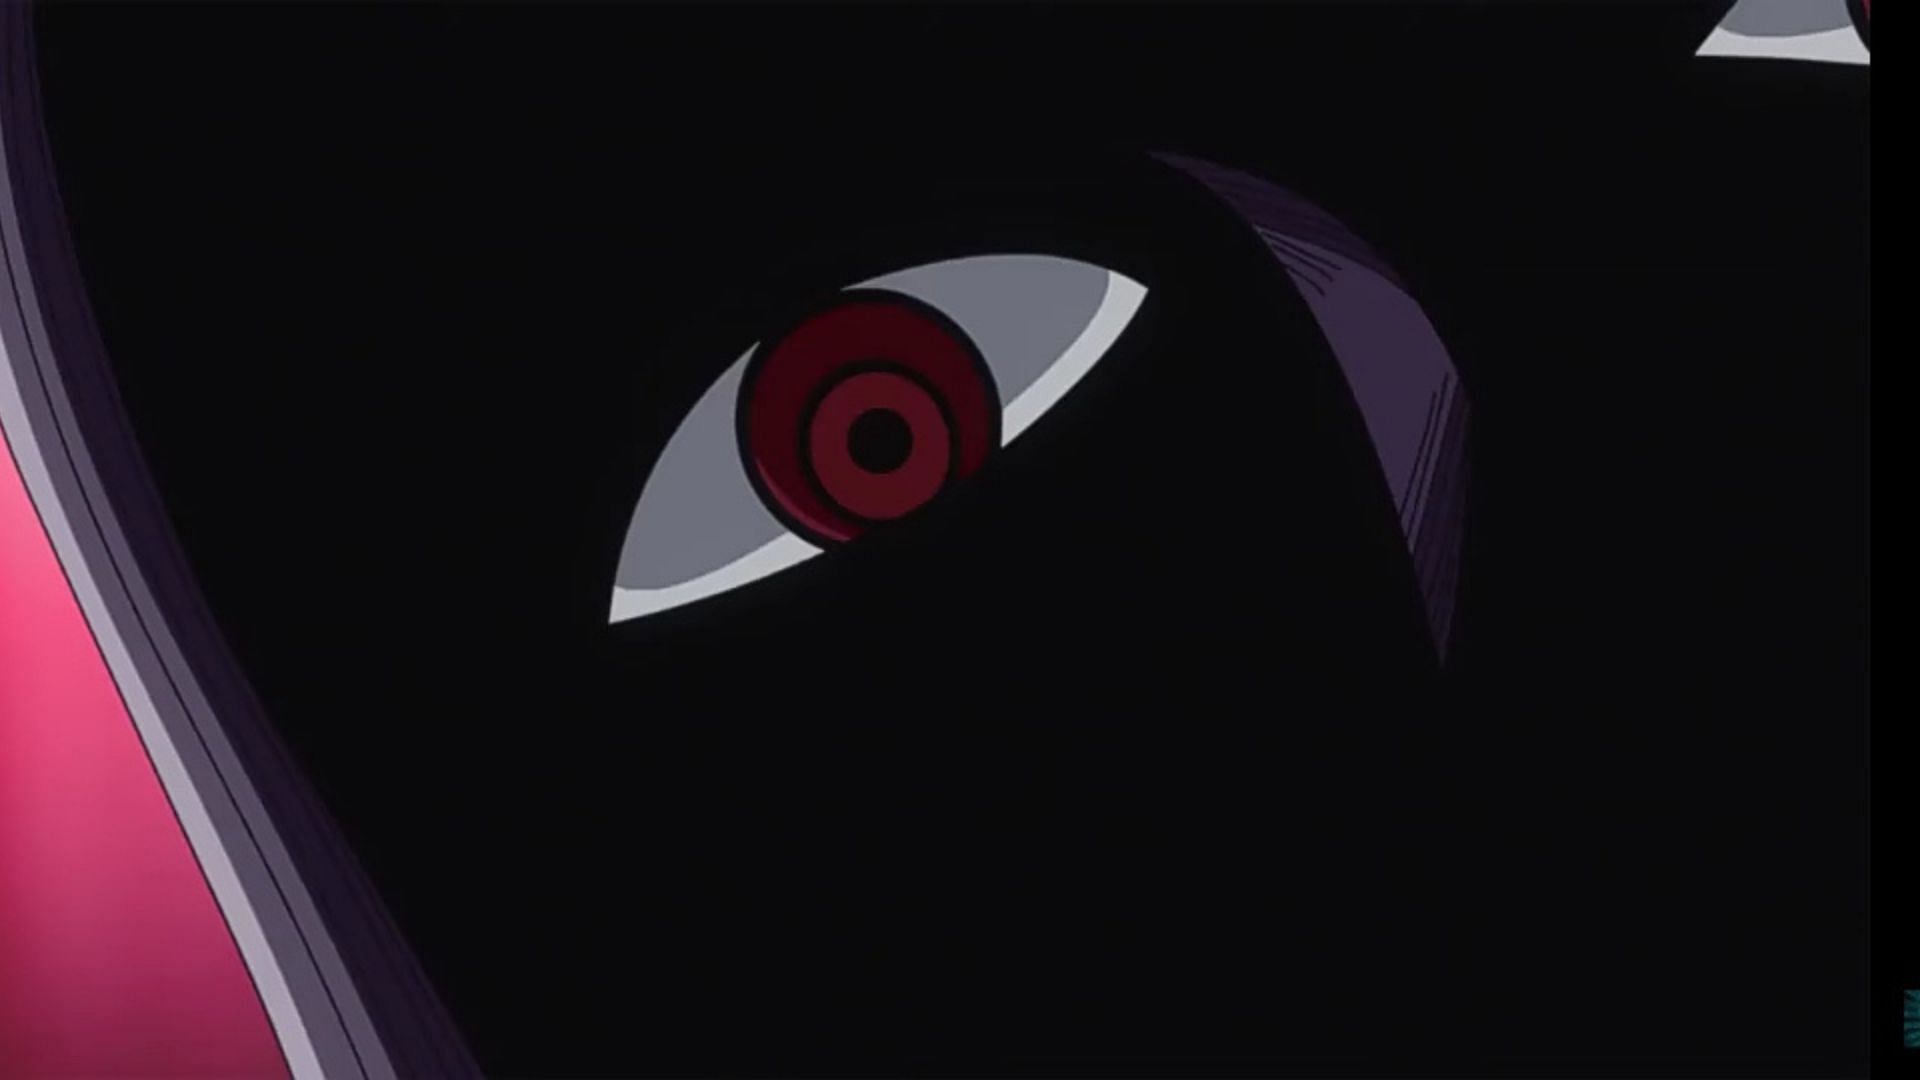 Imu-sama as seen in One Piece (Image via Toei Animation)